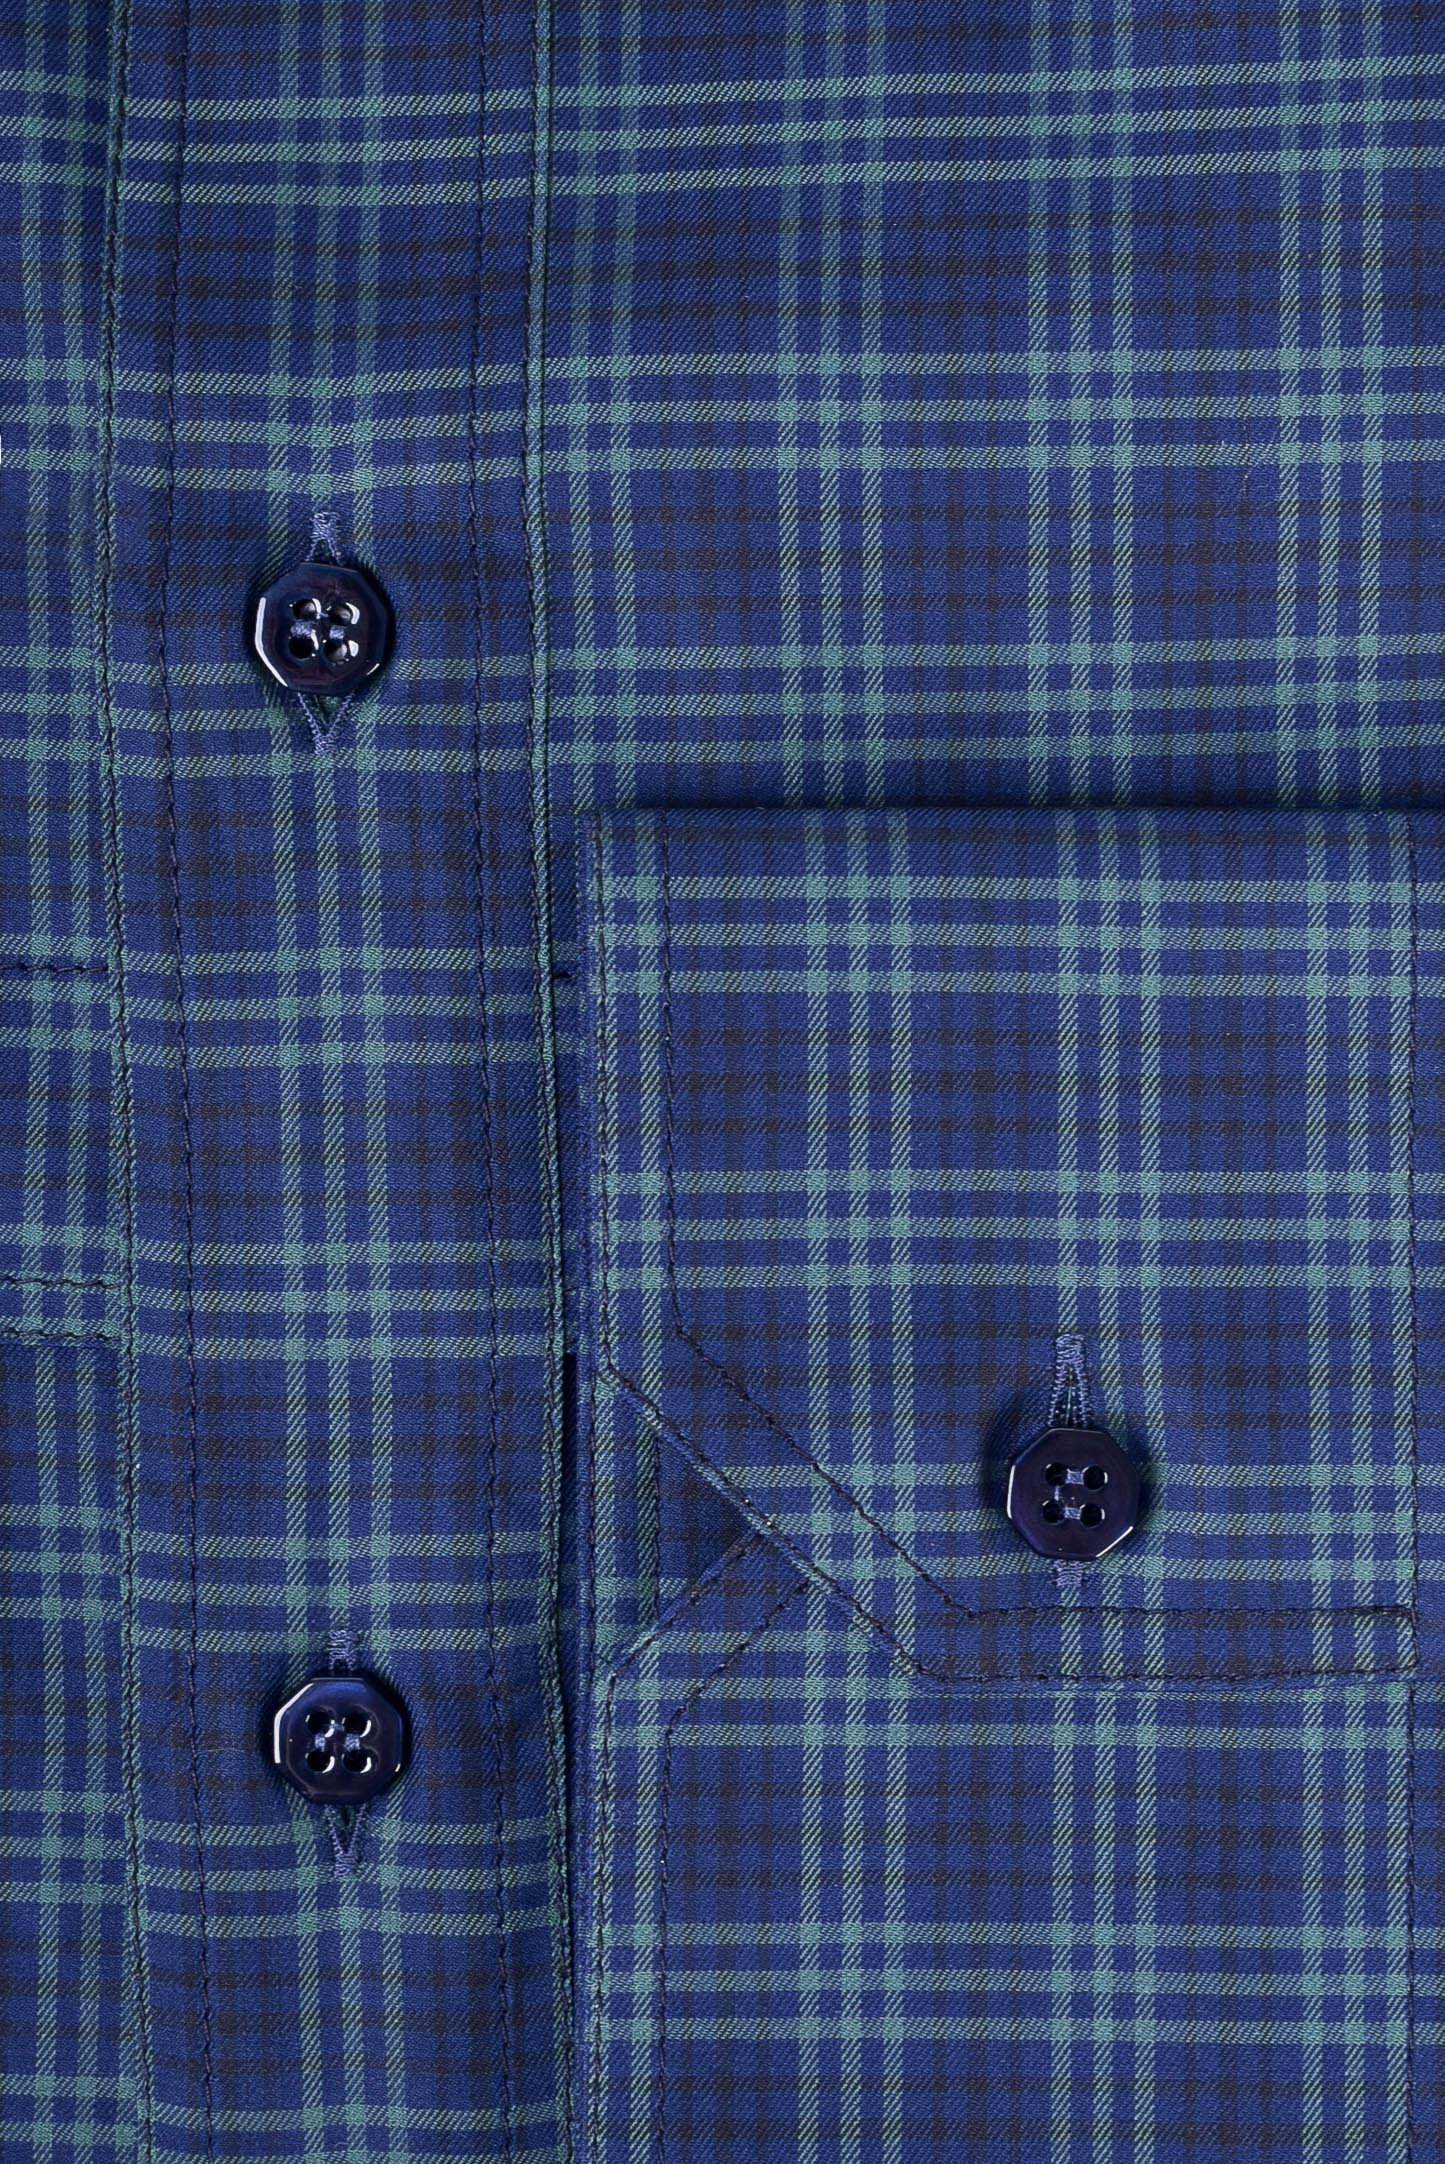 Рубашка STEFANO RICCI MC005632 L2030, цвет: Синий, Мужской